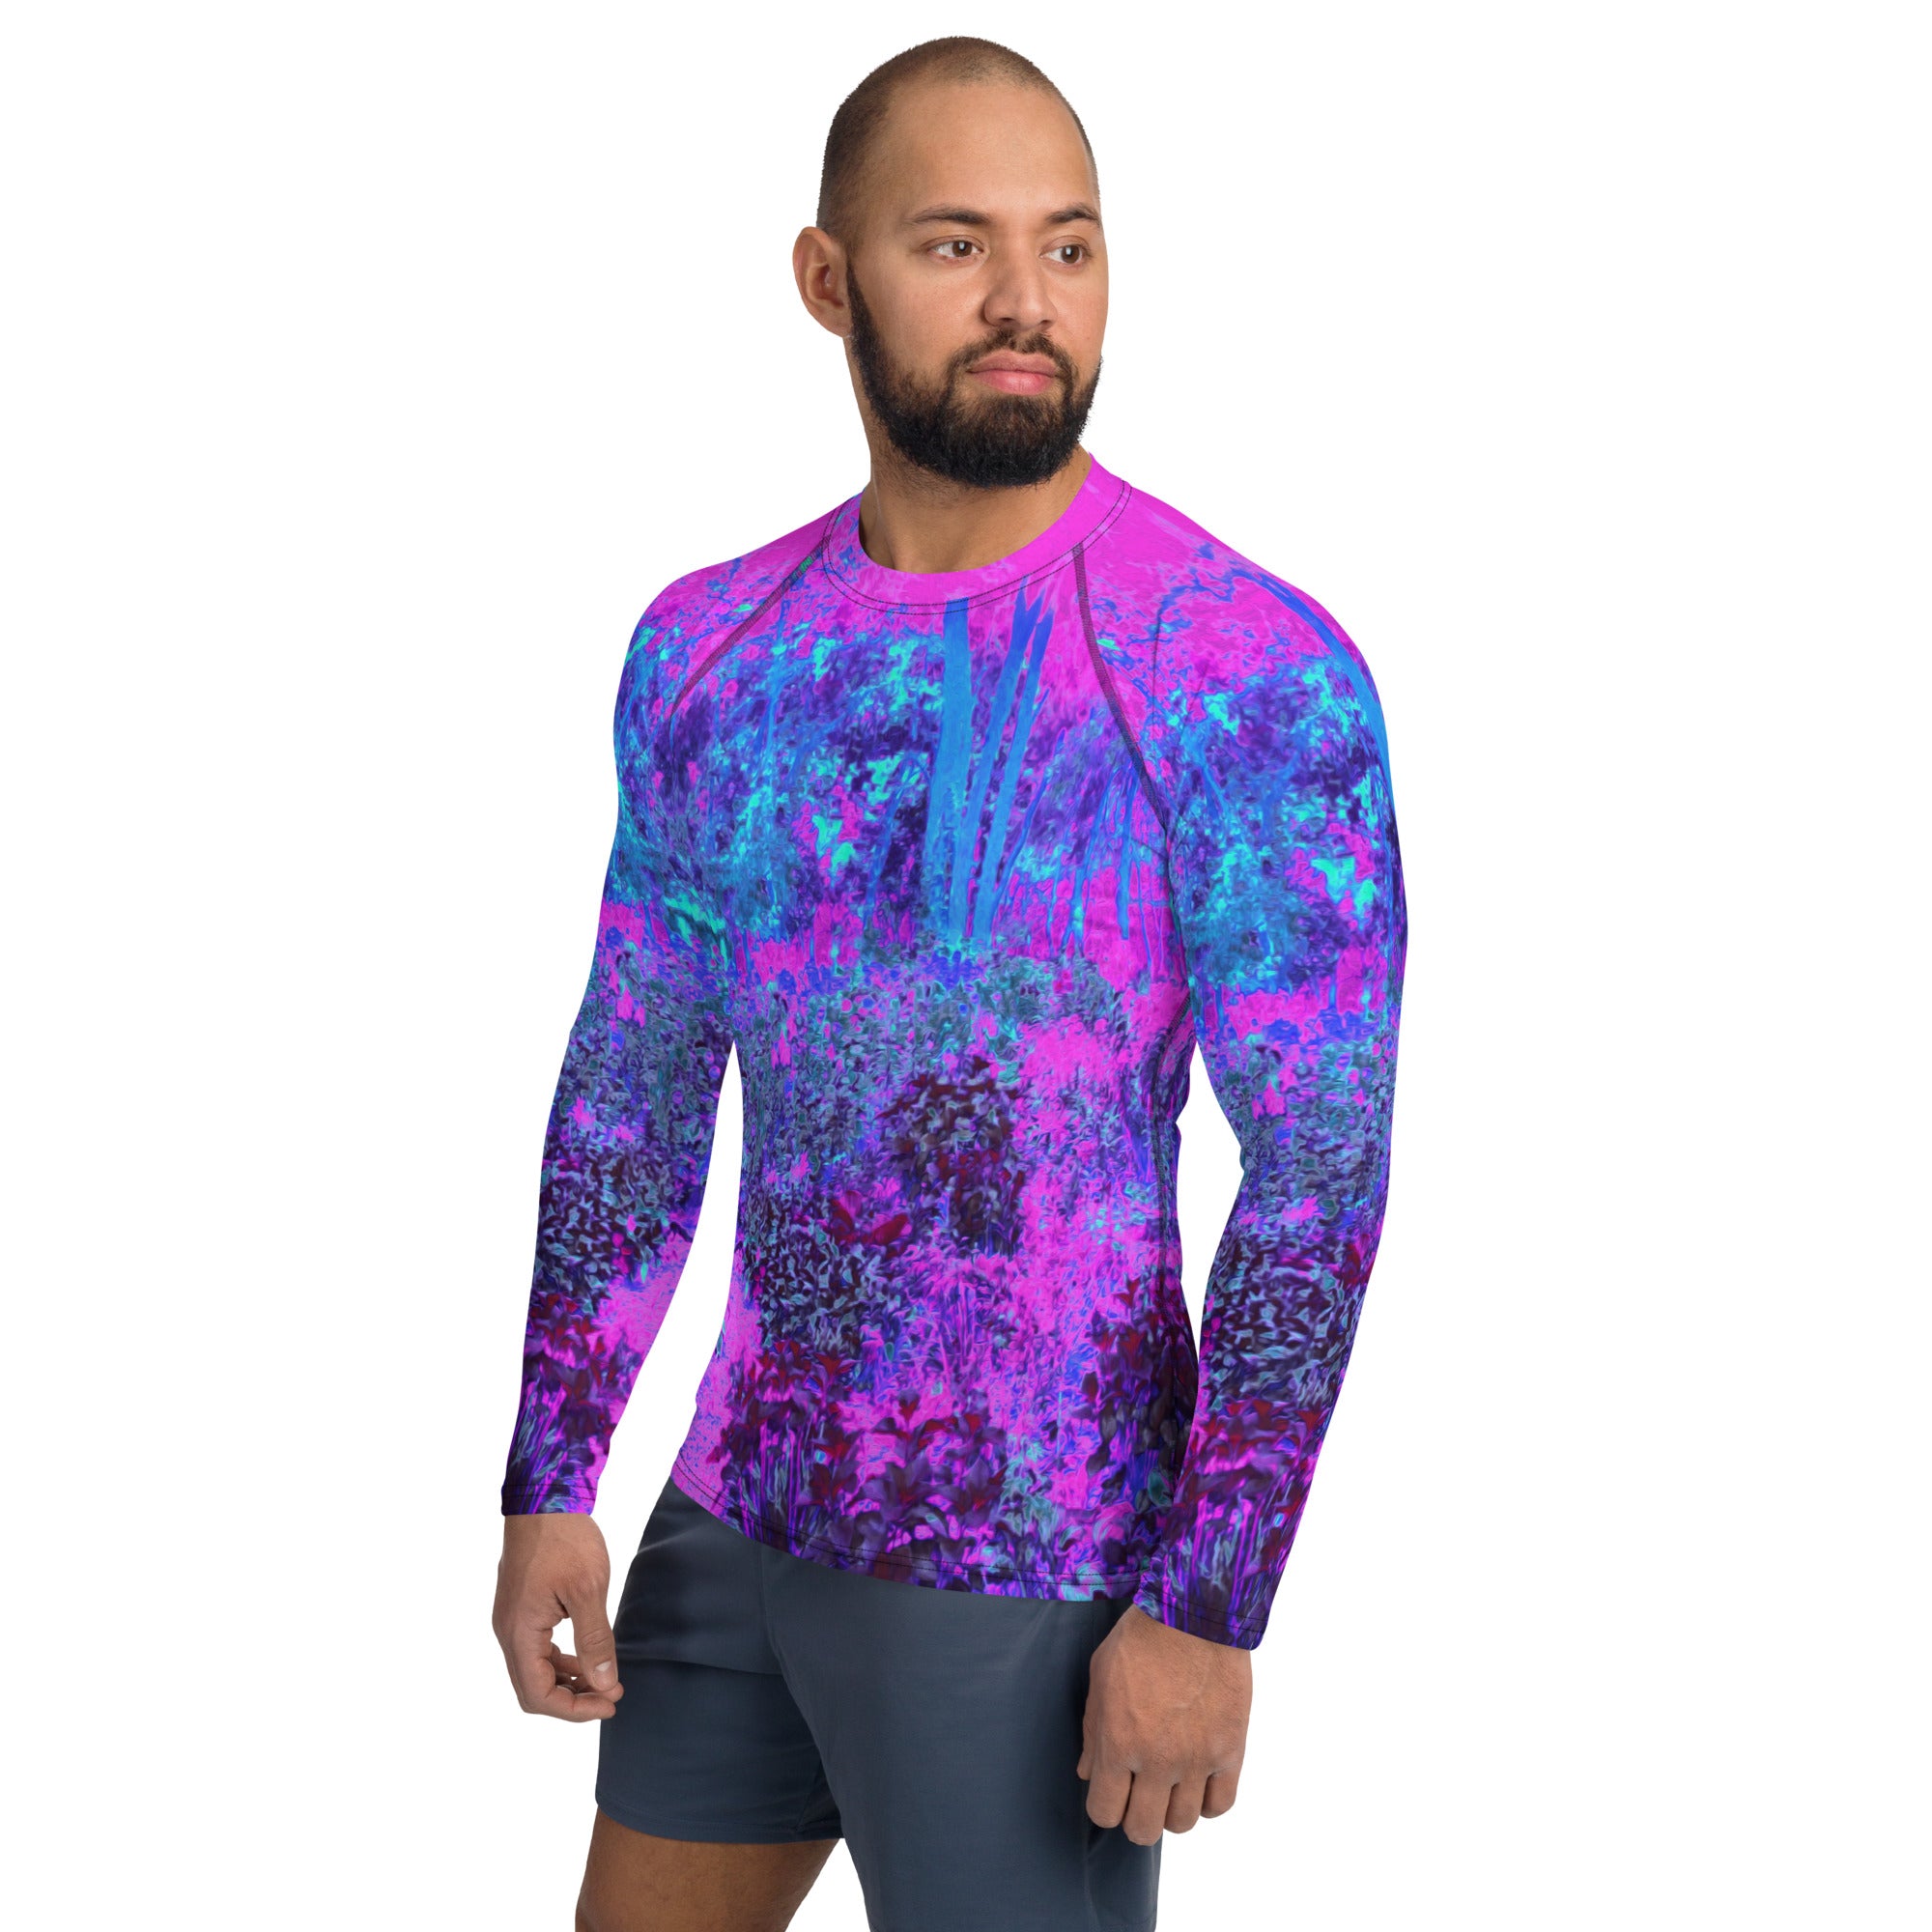 Men's Athletic Rash Guard Shirts - Trippy Hot Pink and Blue Impressionistic Landscape